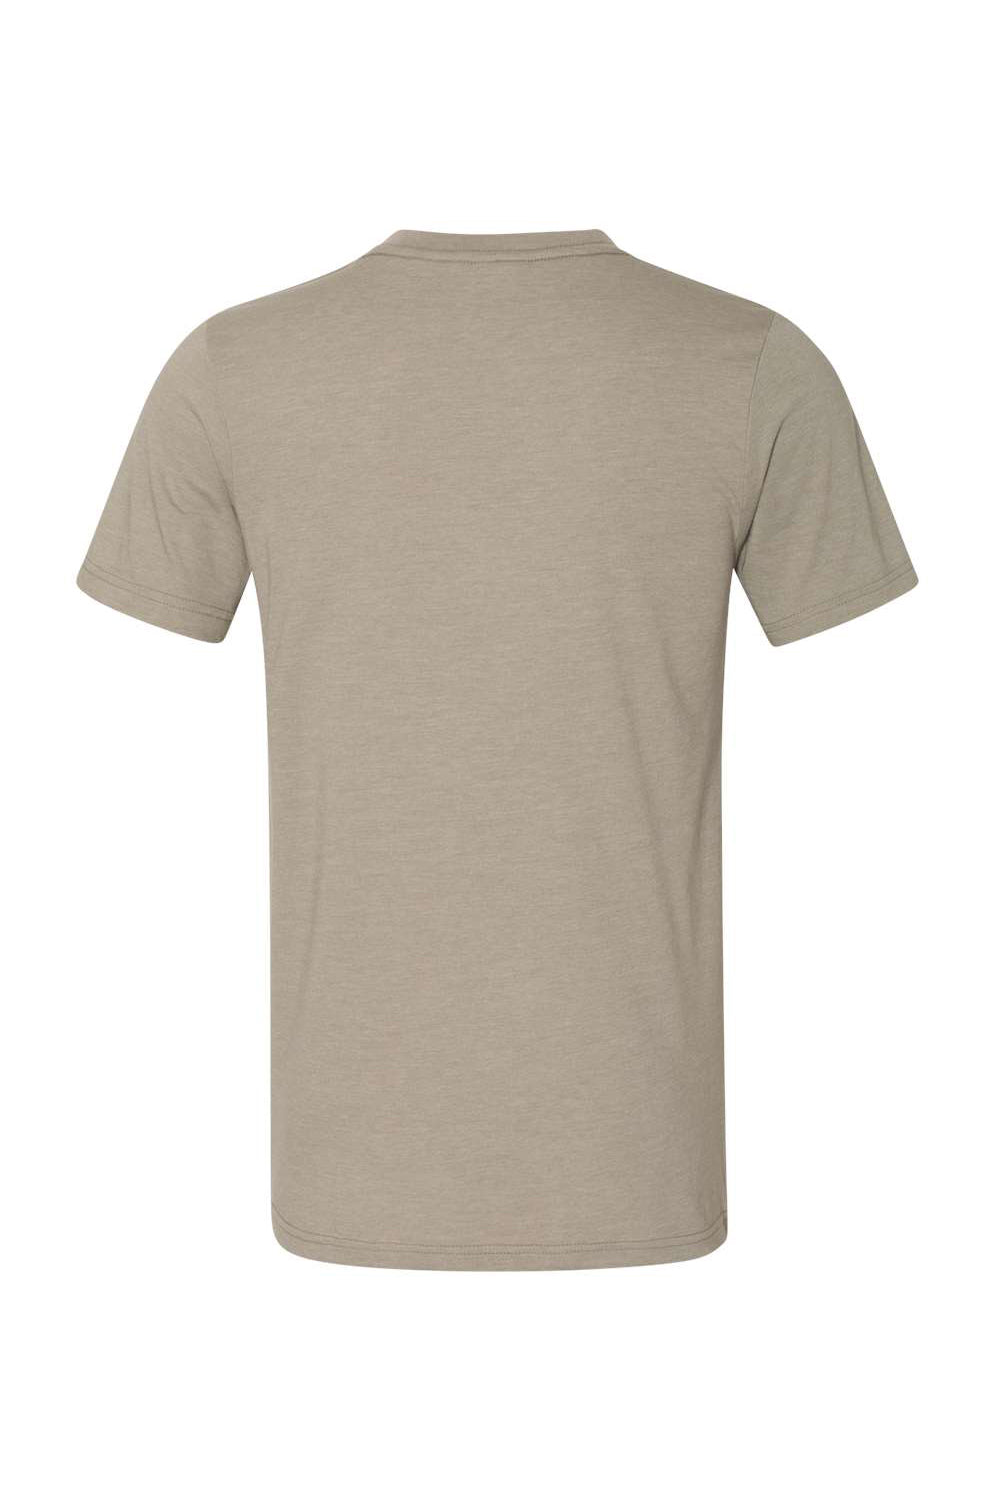 Bella + Canvas BC3005CVC Mens Jersey Short Sleeve V-Neck T-Shirt Heather Stone Flat Back